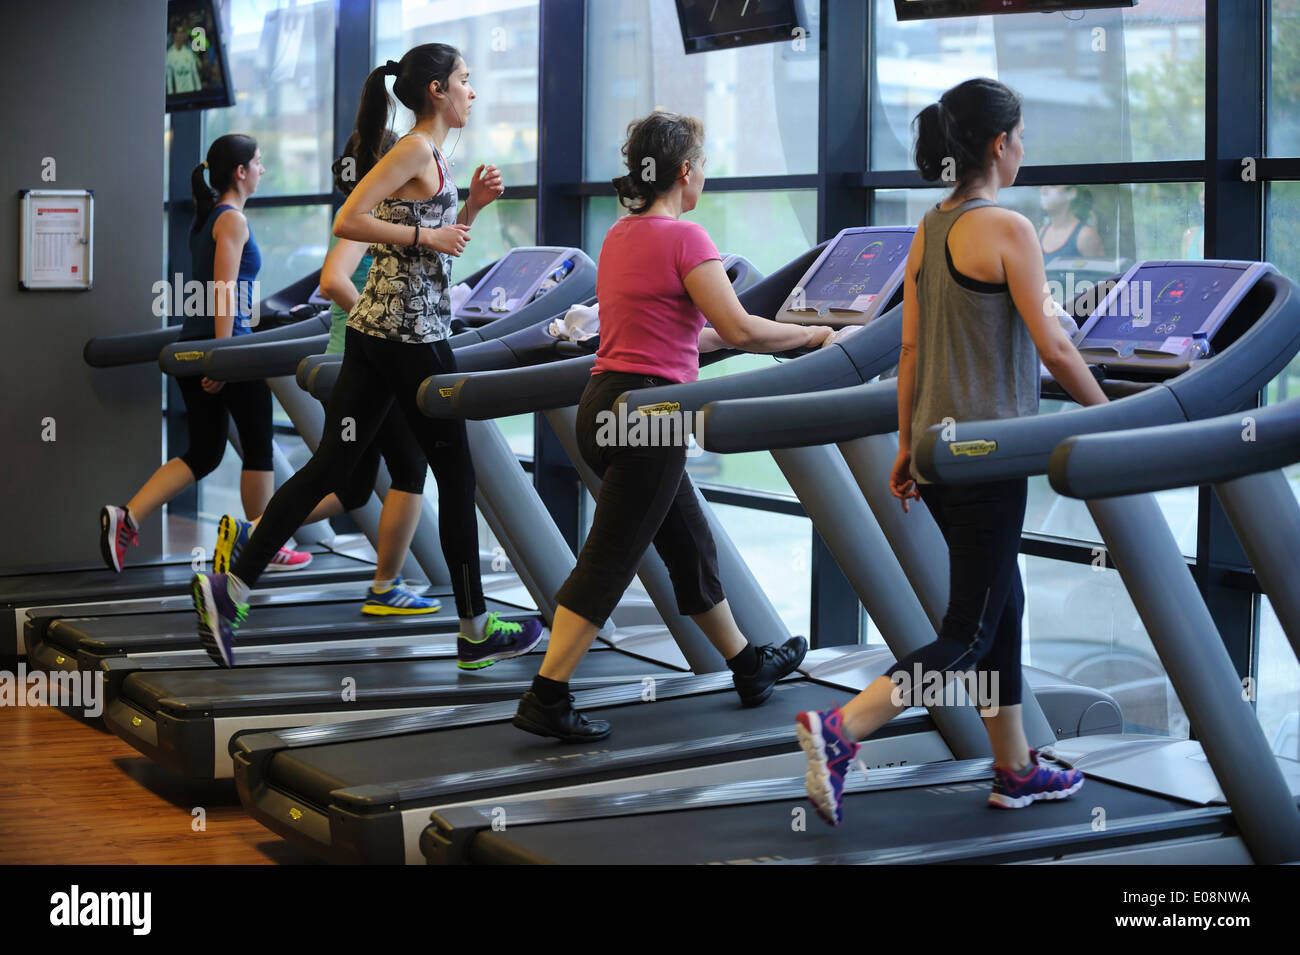 Frauen laufen auf dem Laufband im Fitnessstudio Stockfotografie - Alamy